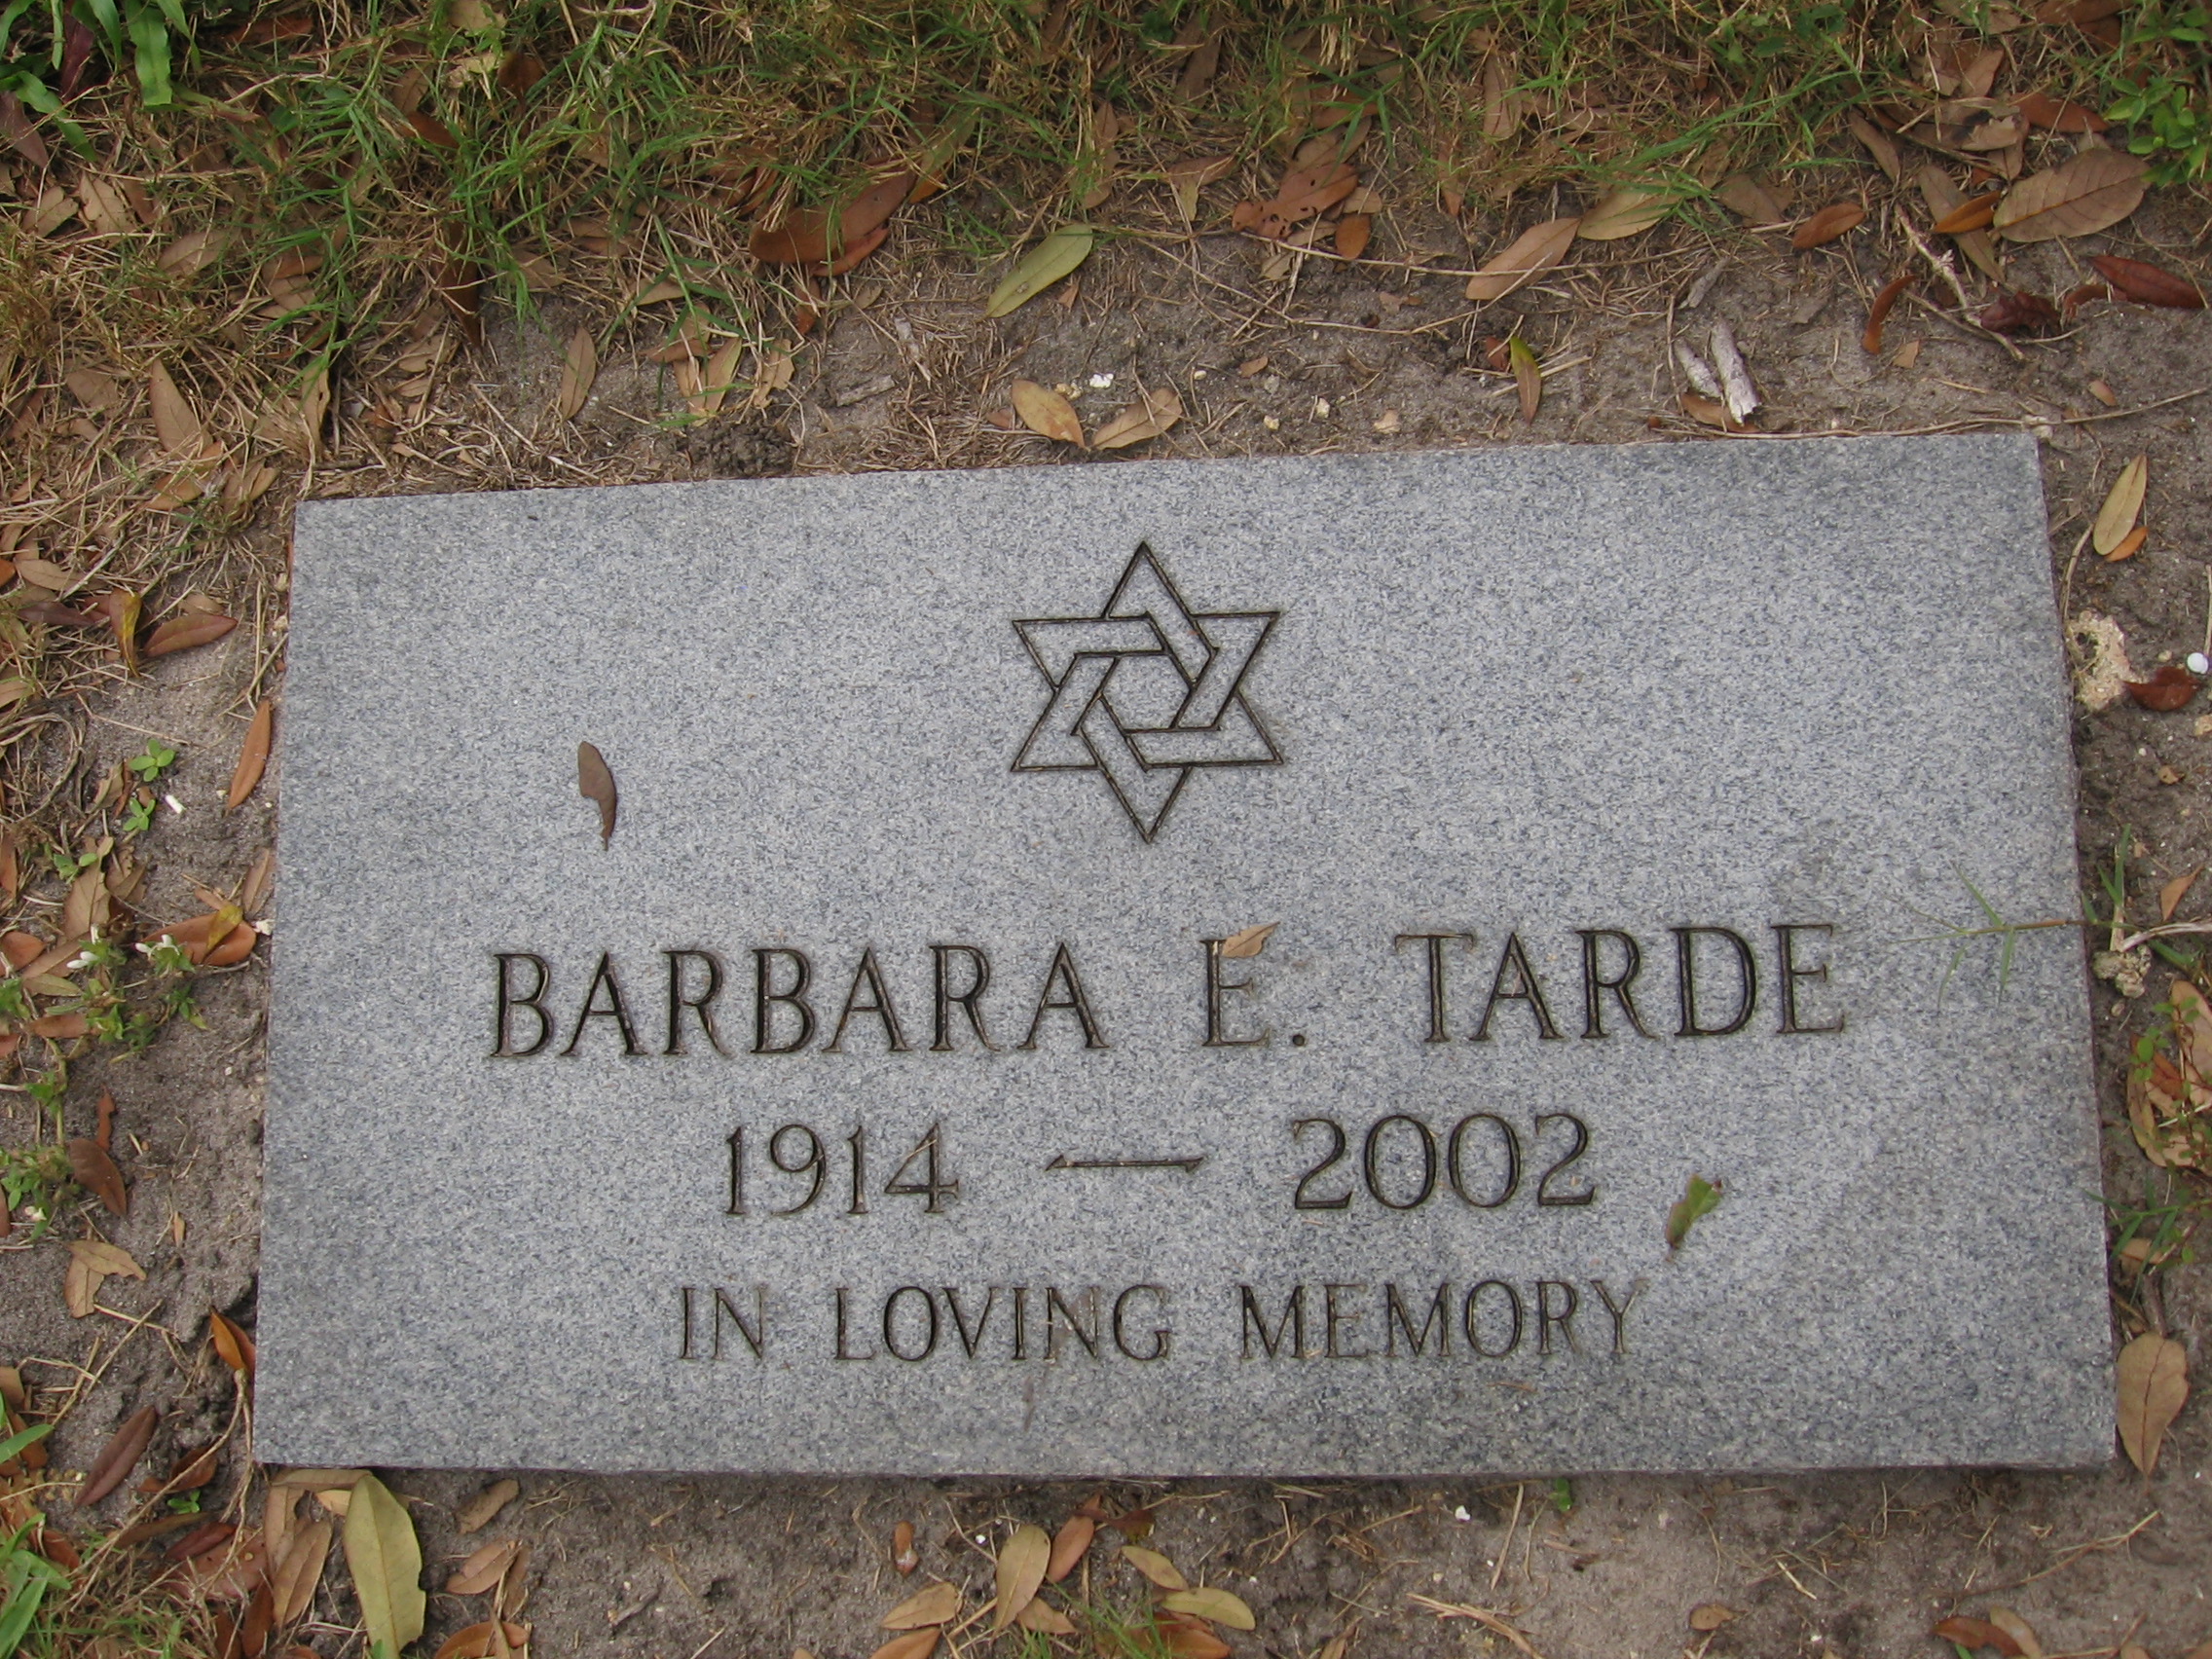 Barbara E Tarde